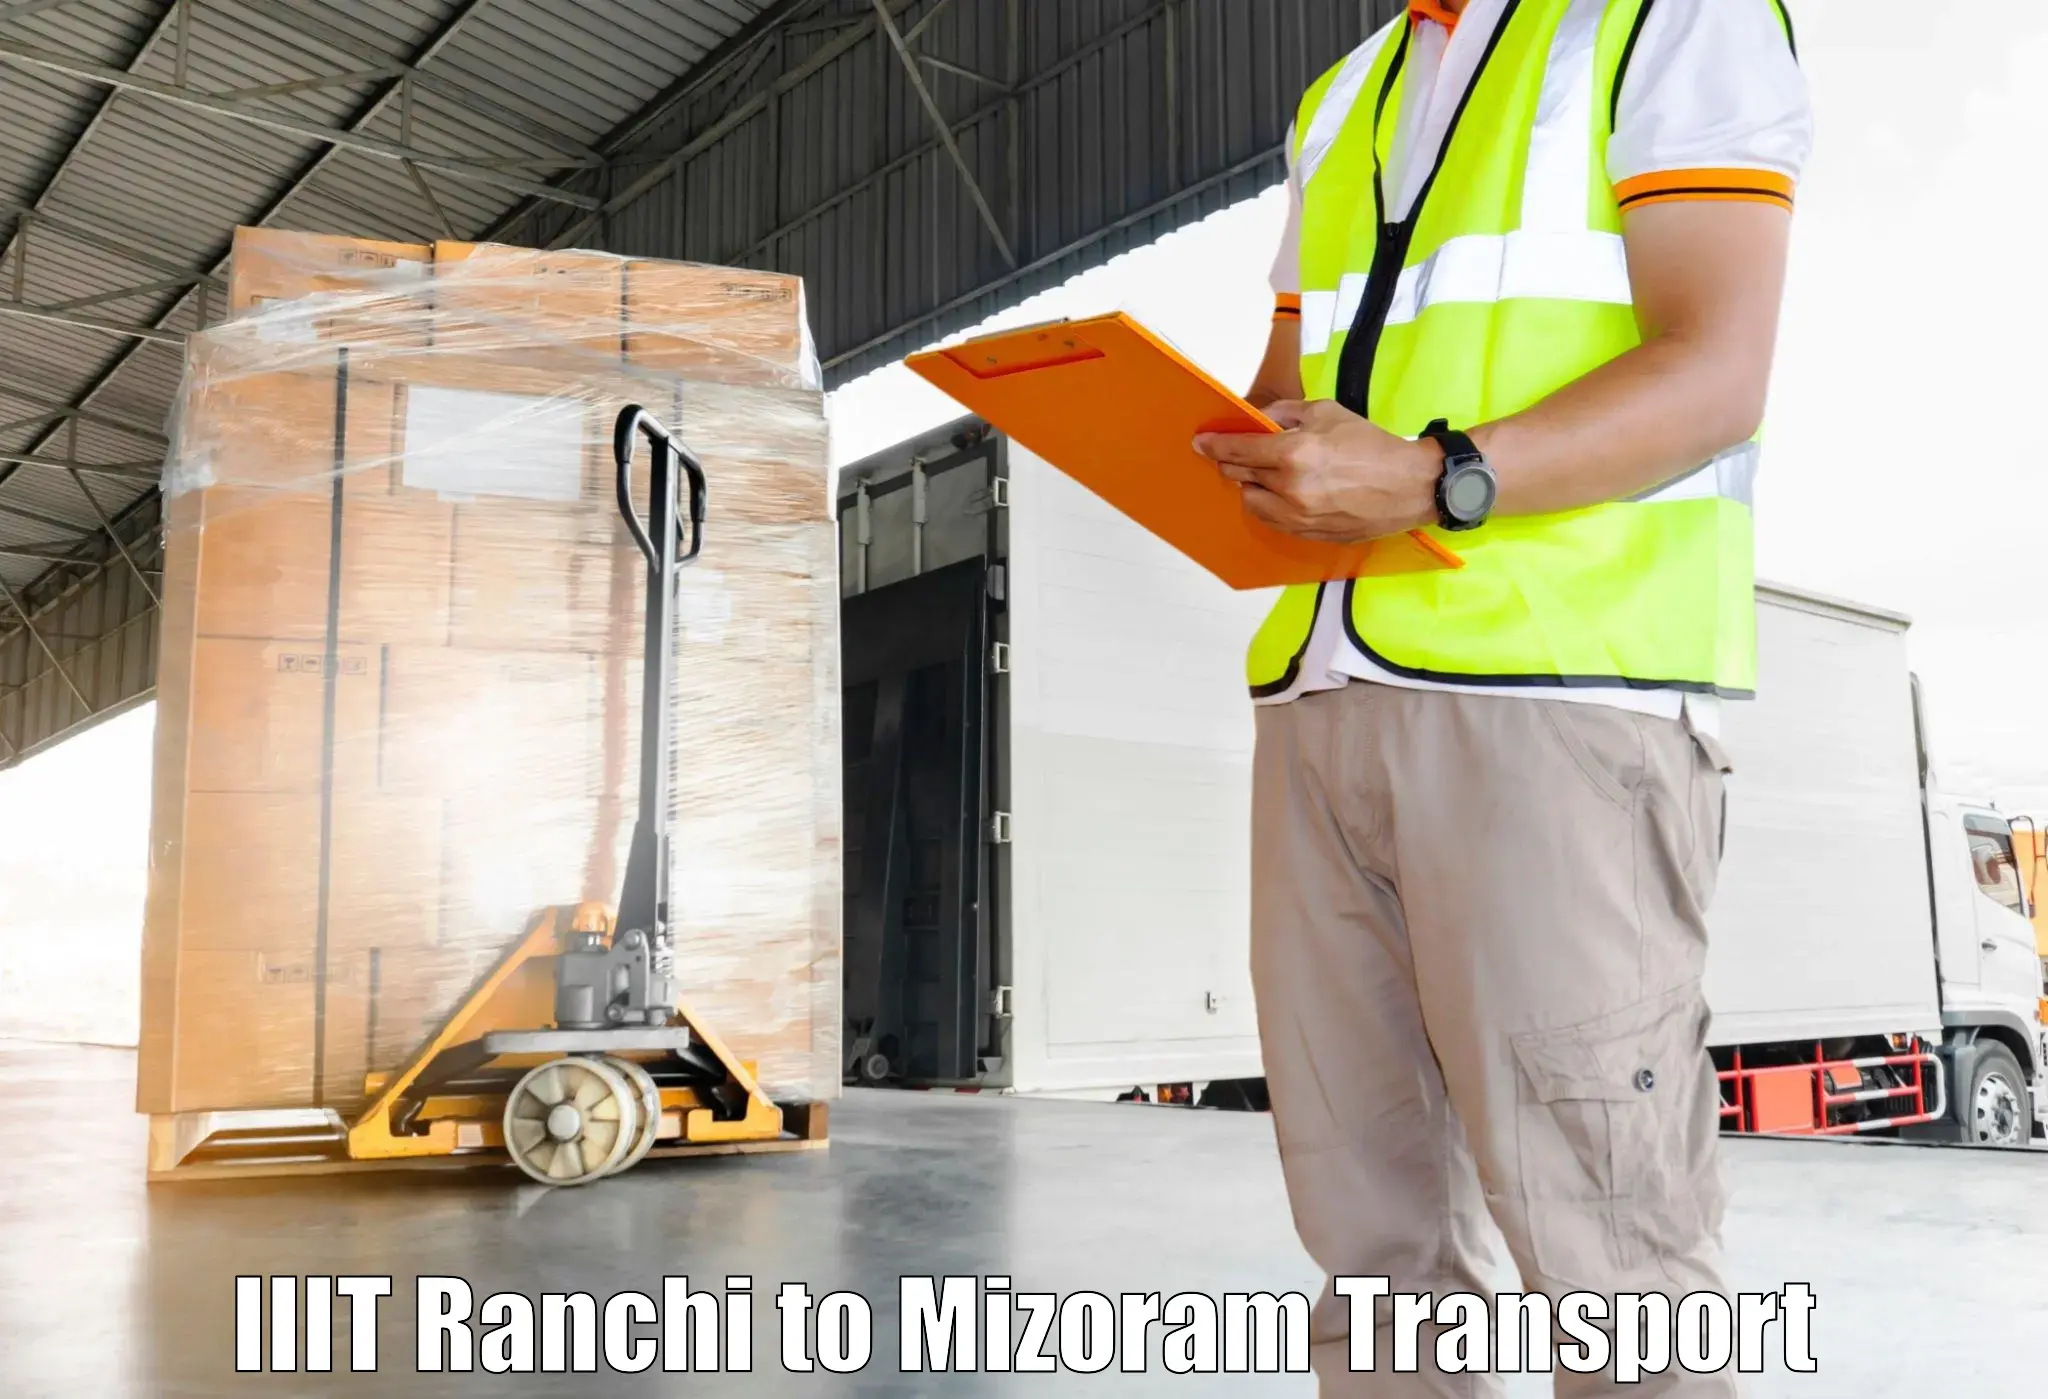 All India transport service IIIT Ranchi to Mizoram